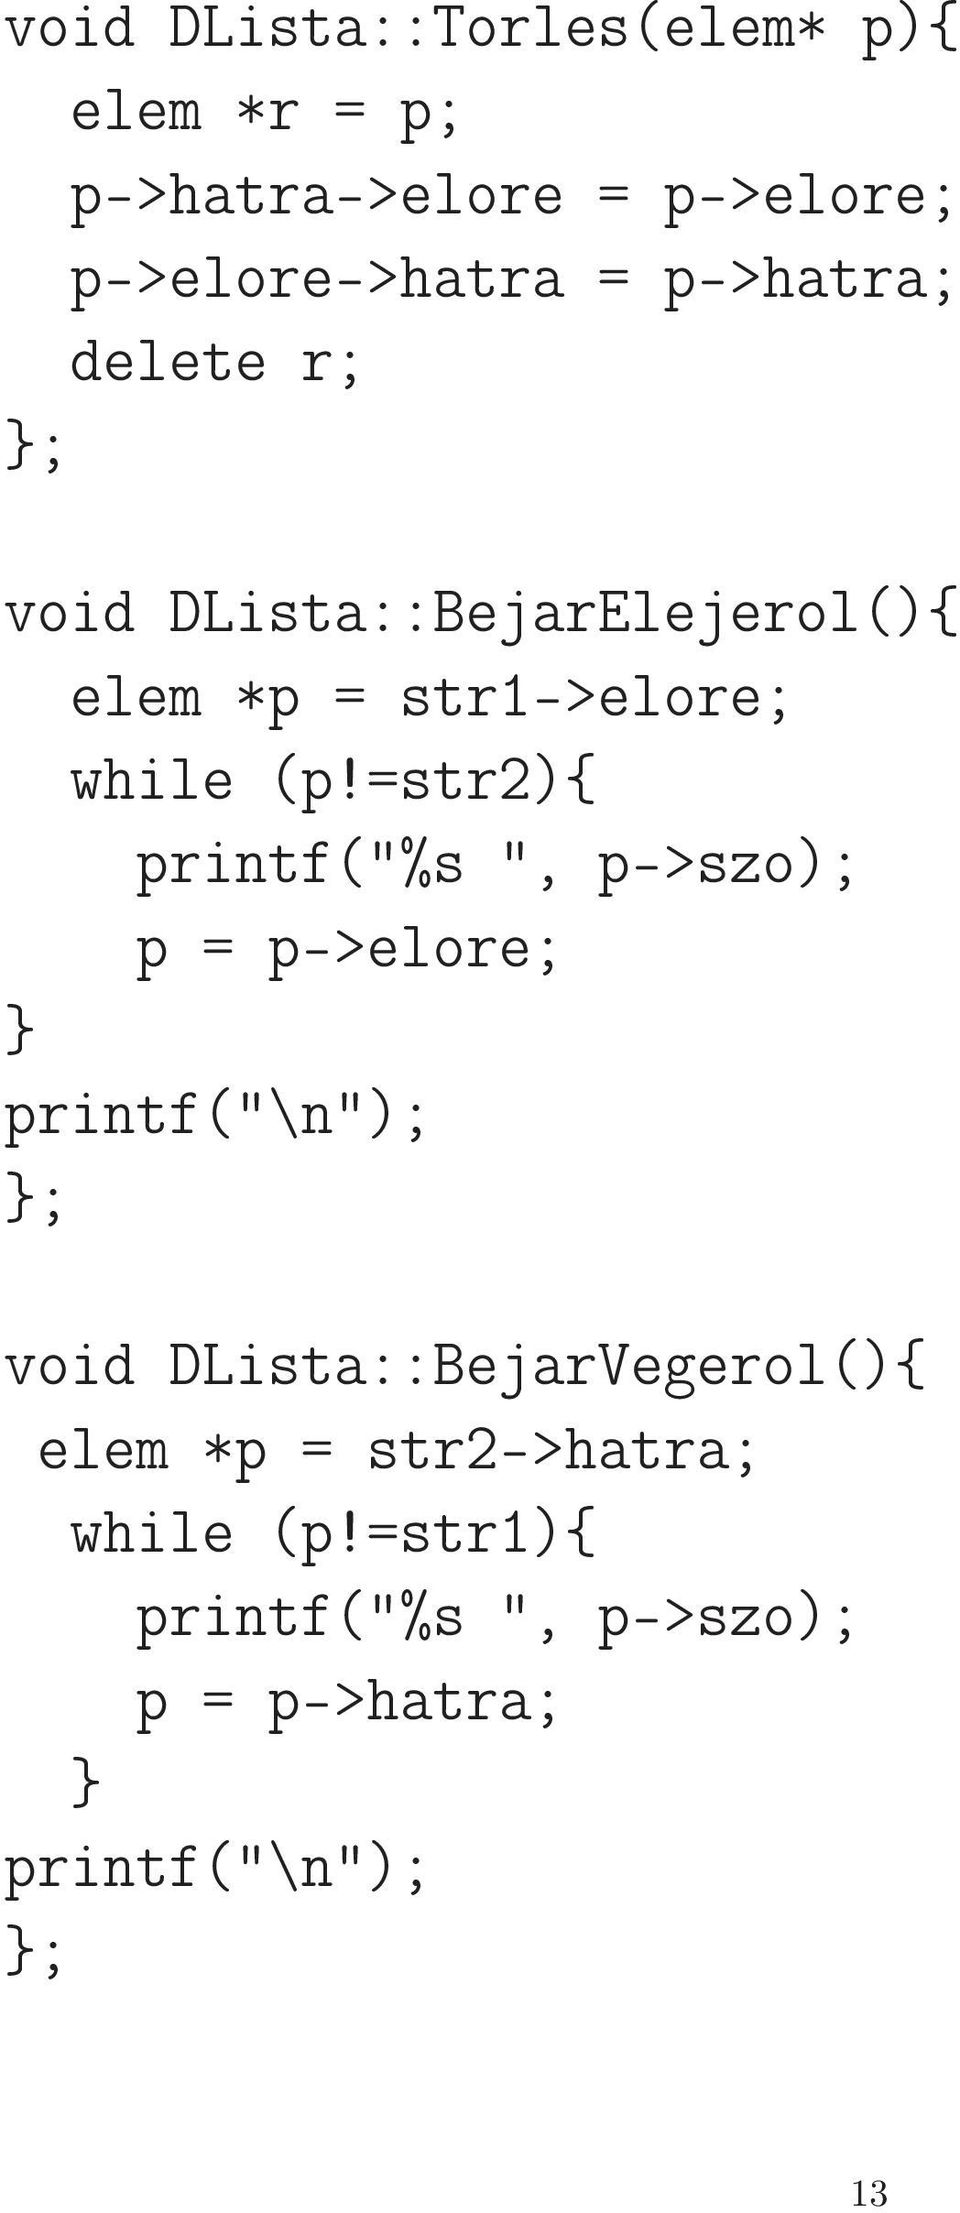 =str2){ printf("%s ", p->szo); p = p->elore; printf("\n"); void DLista::BejarVegerol(){